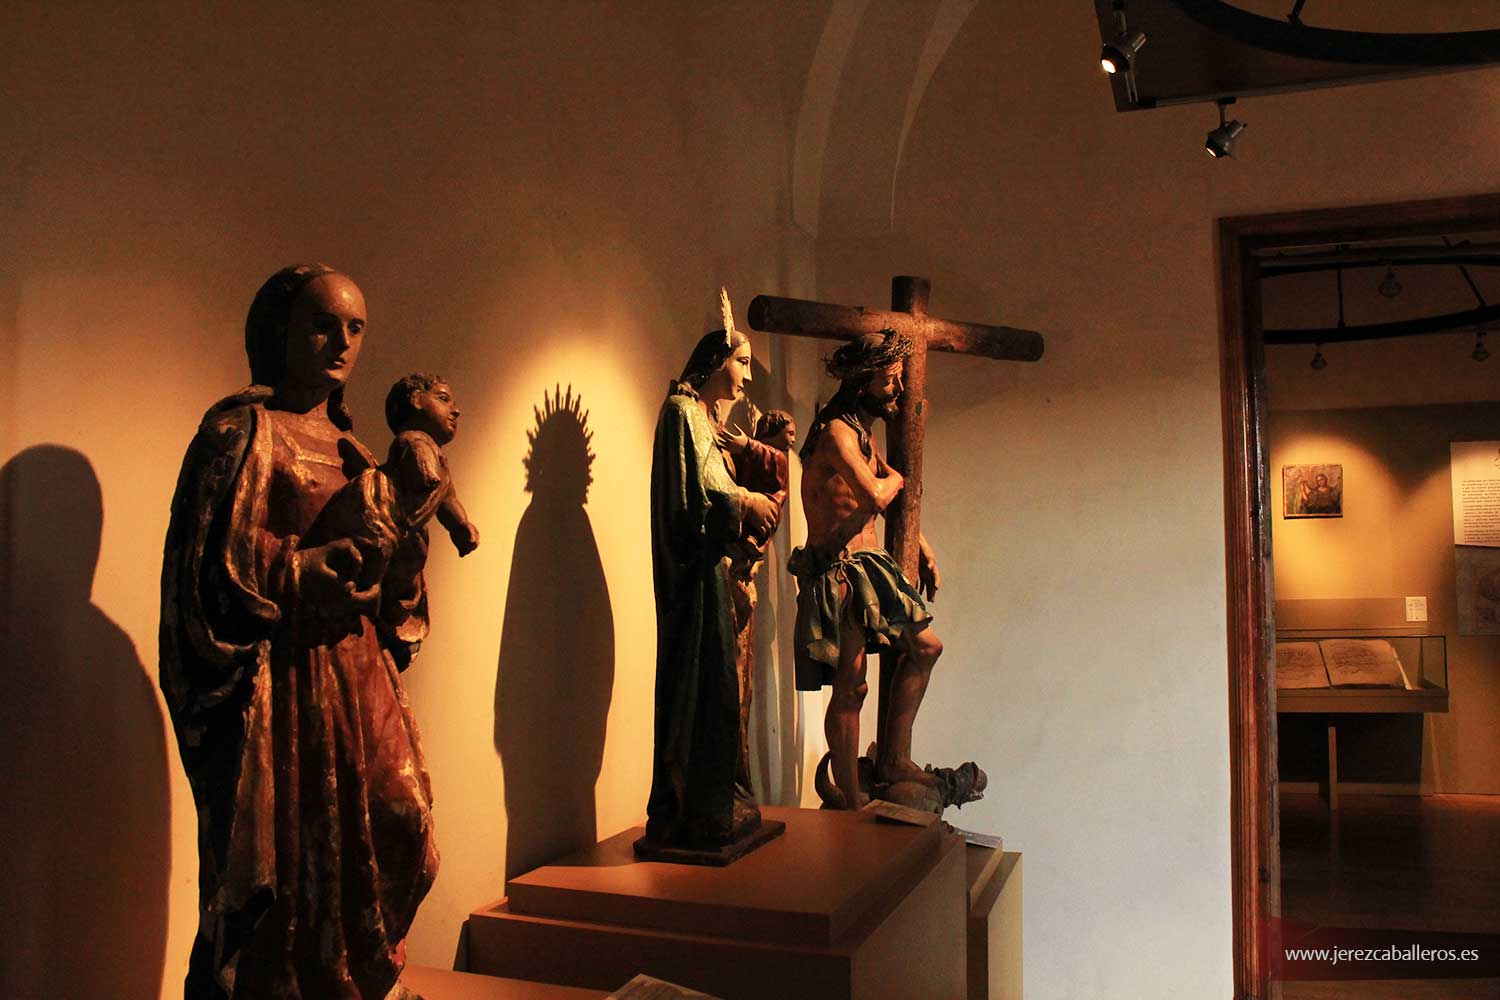 Museo del Arte Sacro